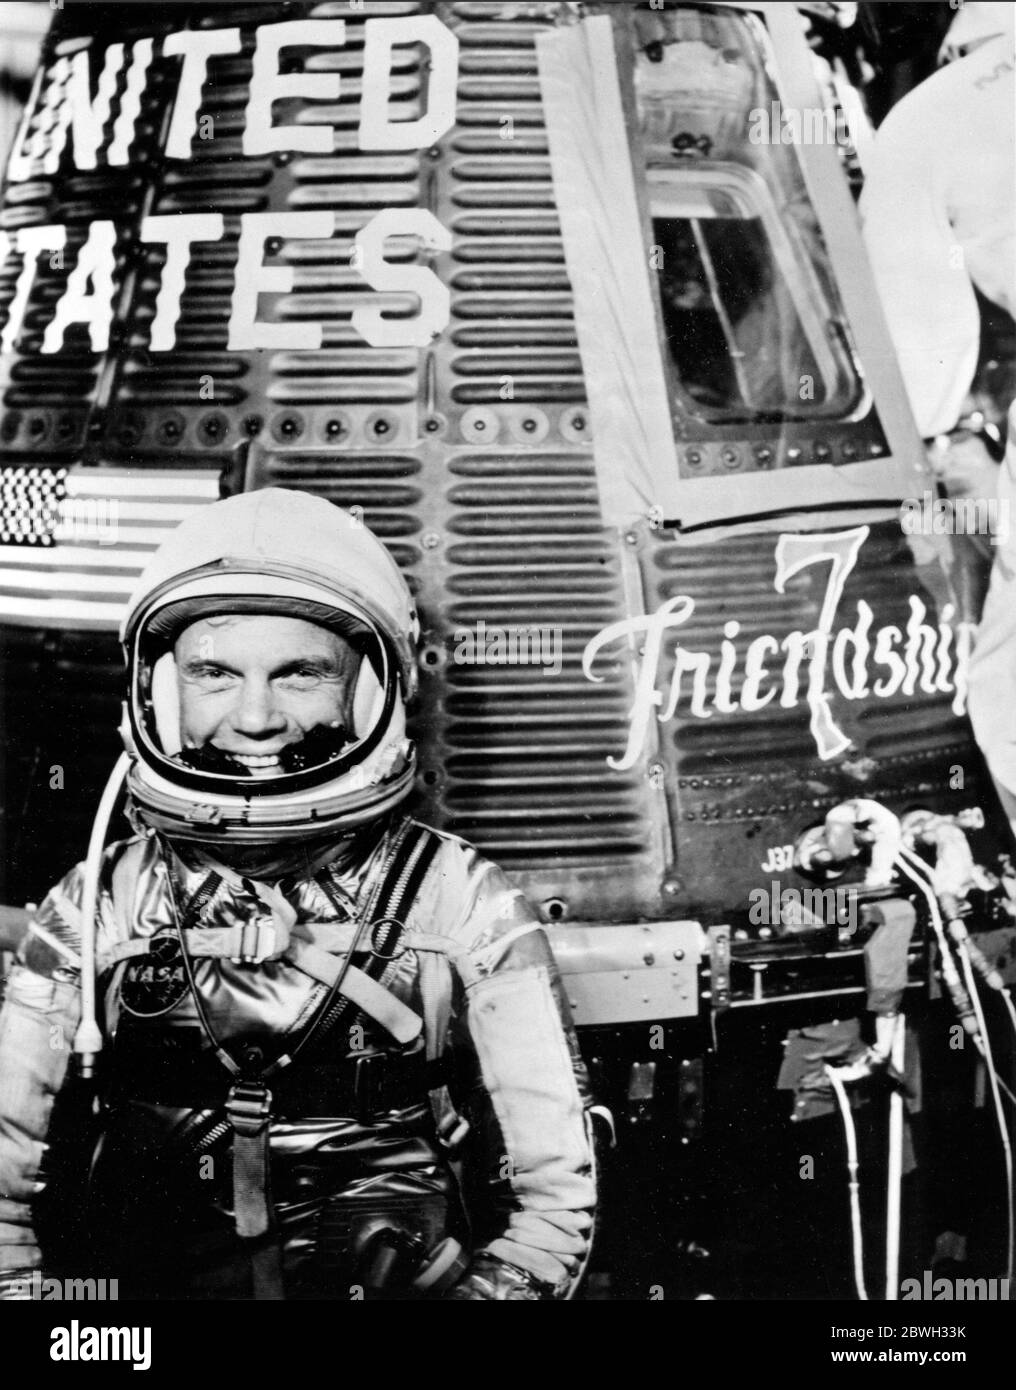 Astronaut John Glenn and the Mercury capsule Friendship 7 Stock Photo